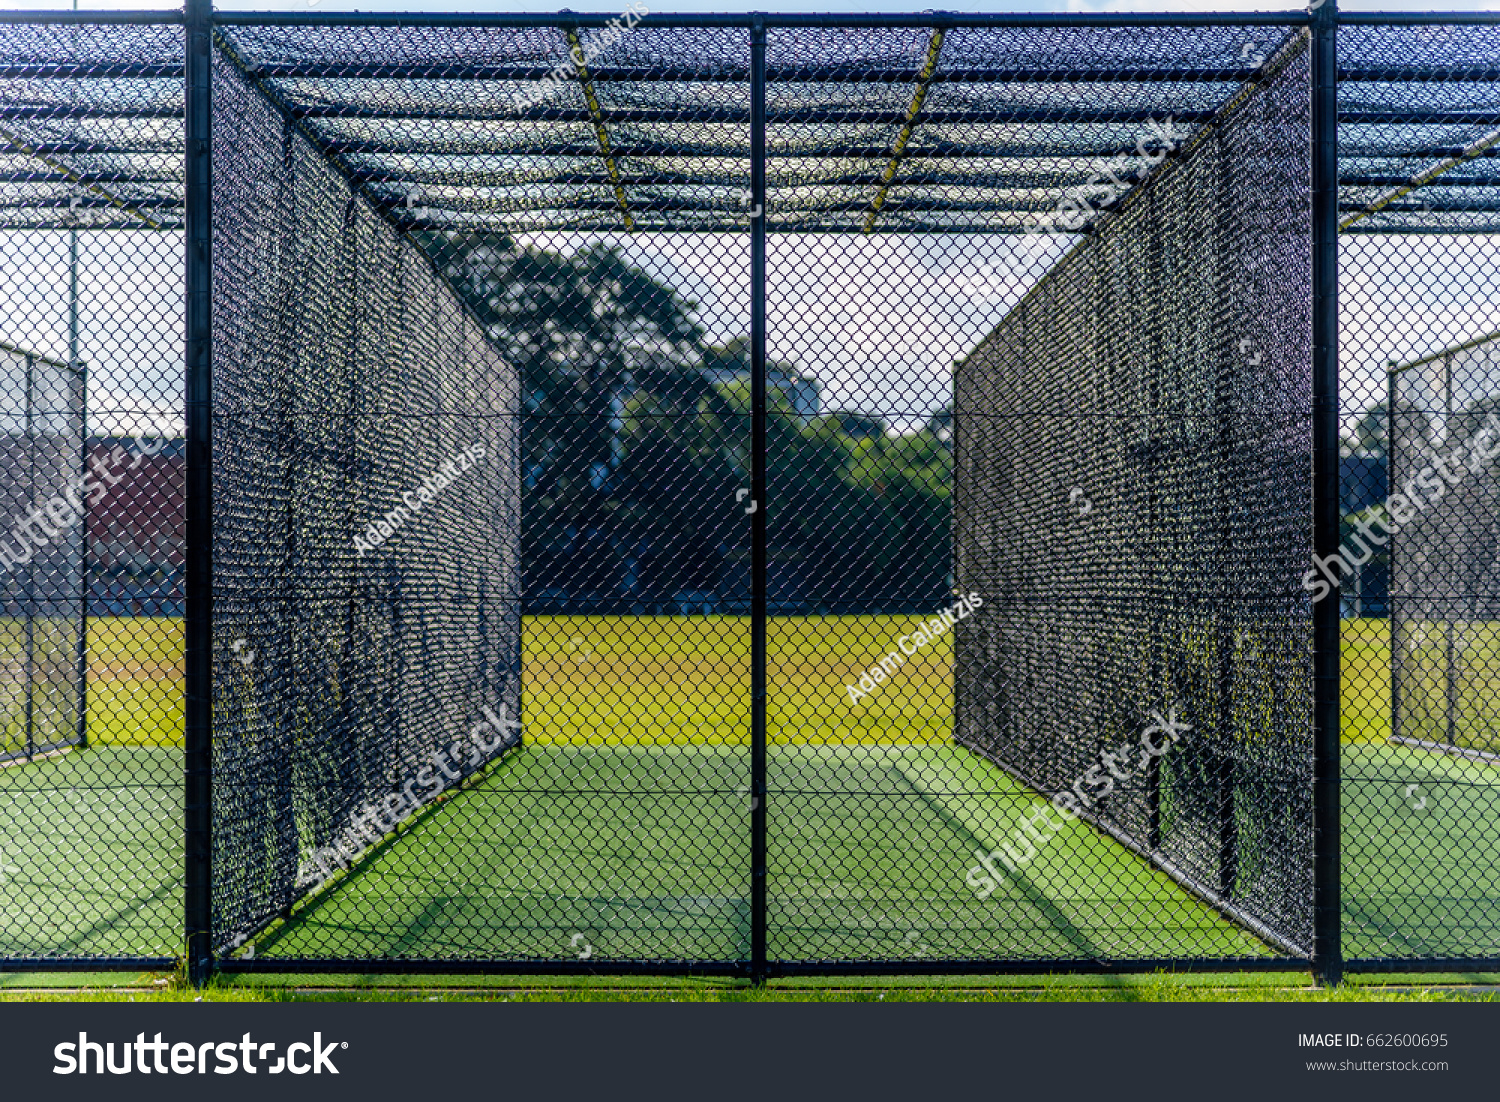 A cricket practice net on green grass in Melbourne, Victoria, Australia #662600695